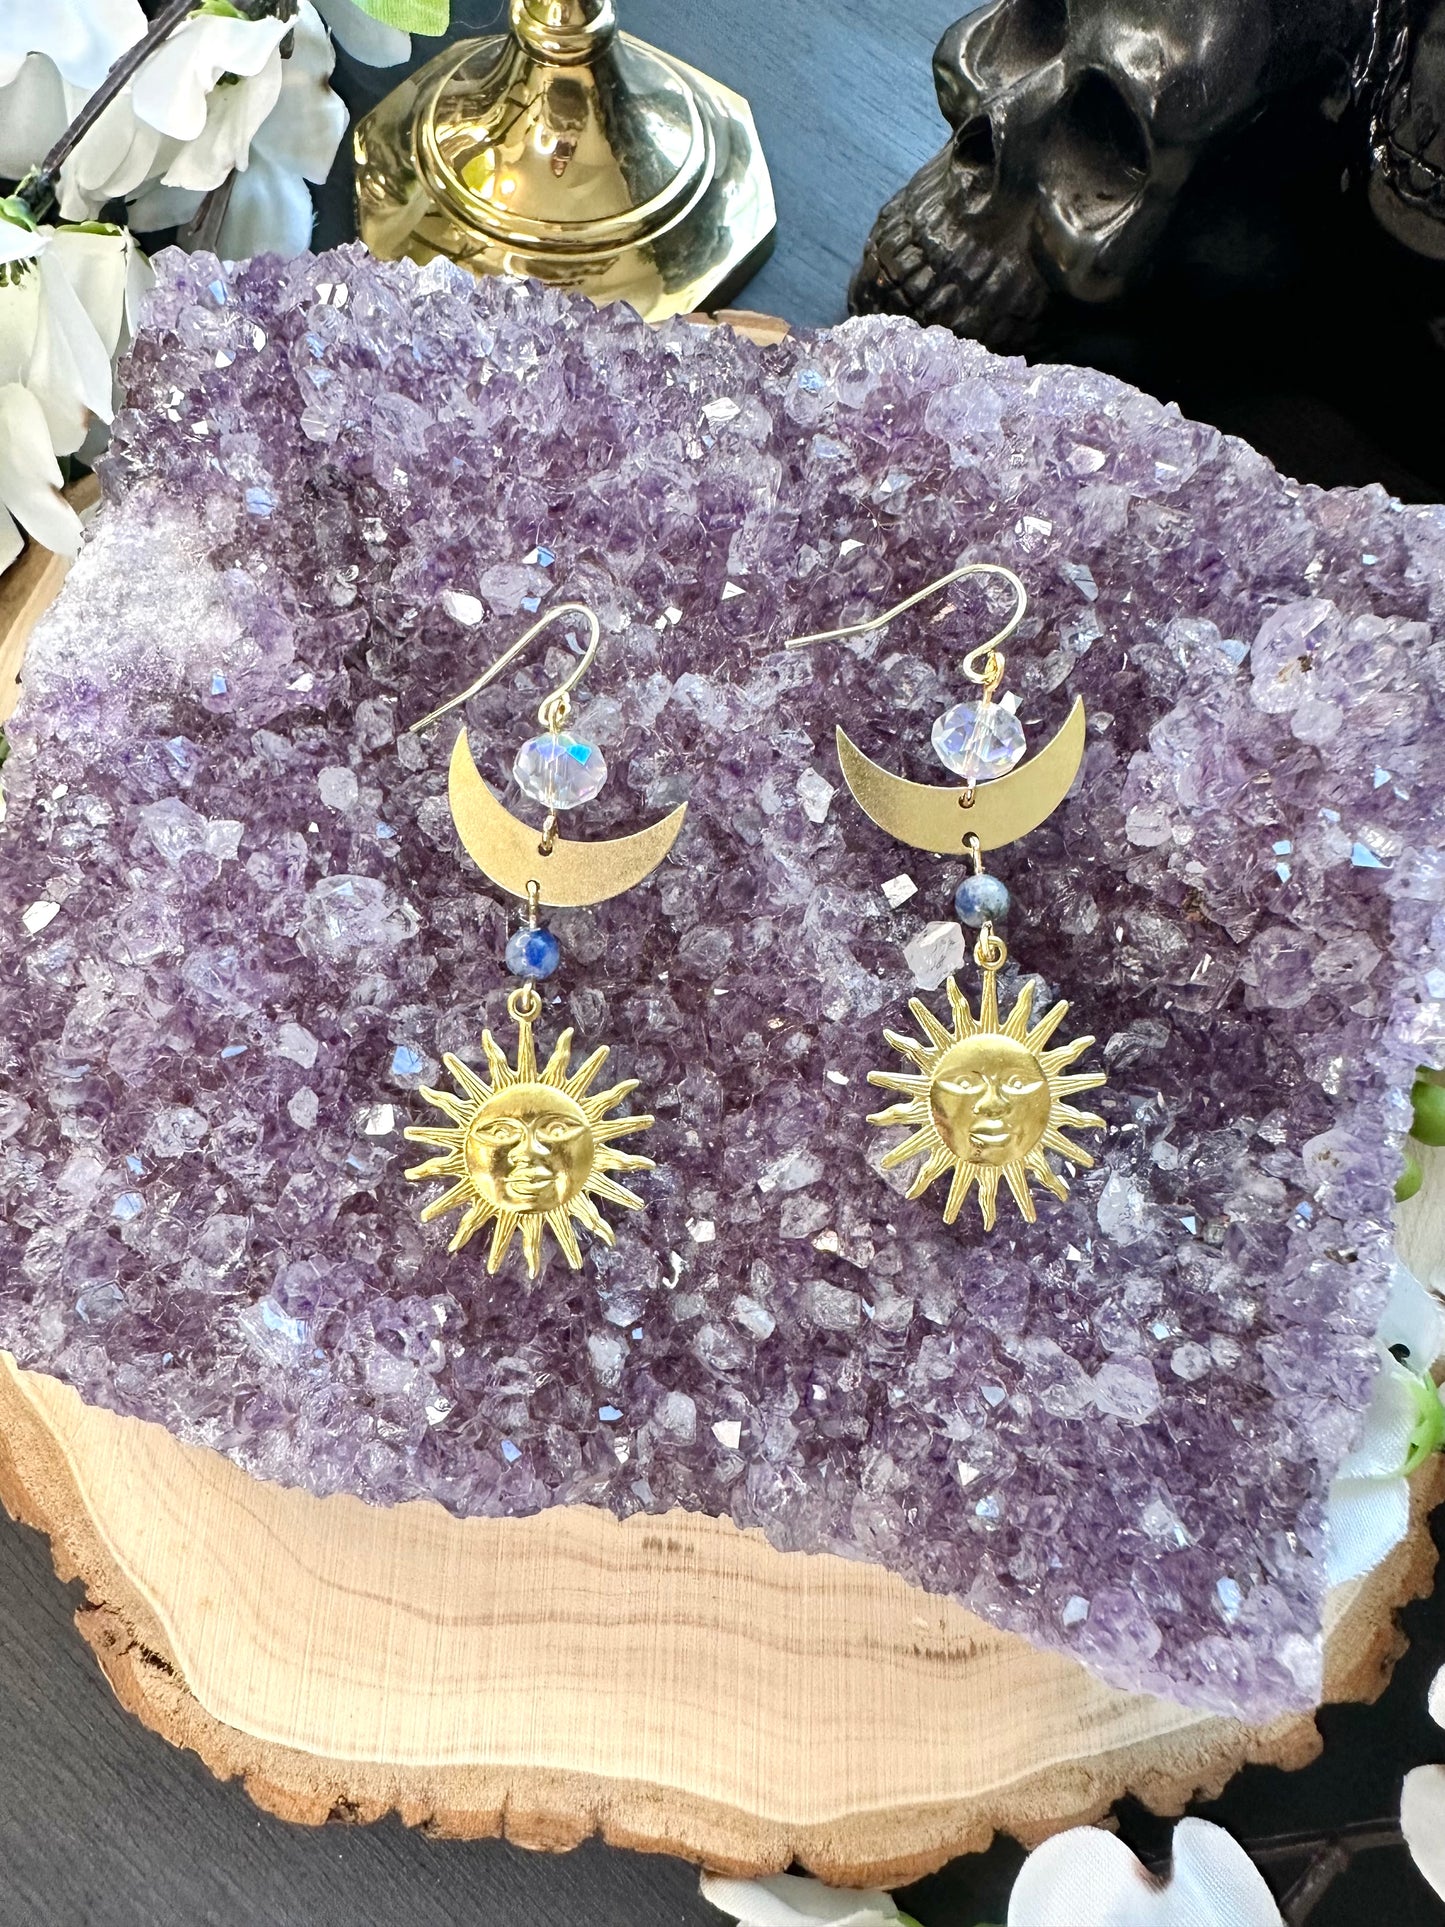 Sodalite sun and moon earrings